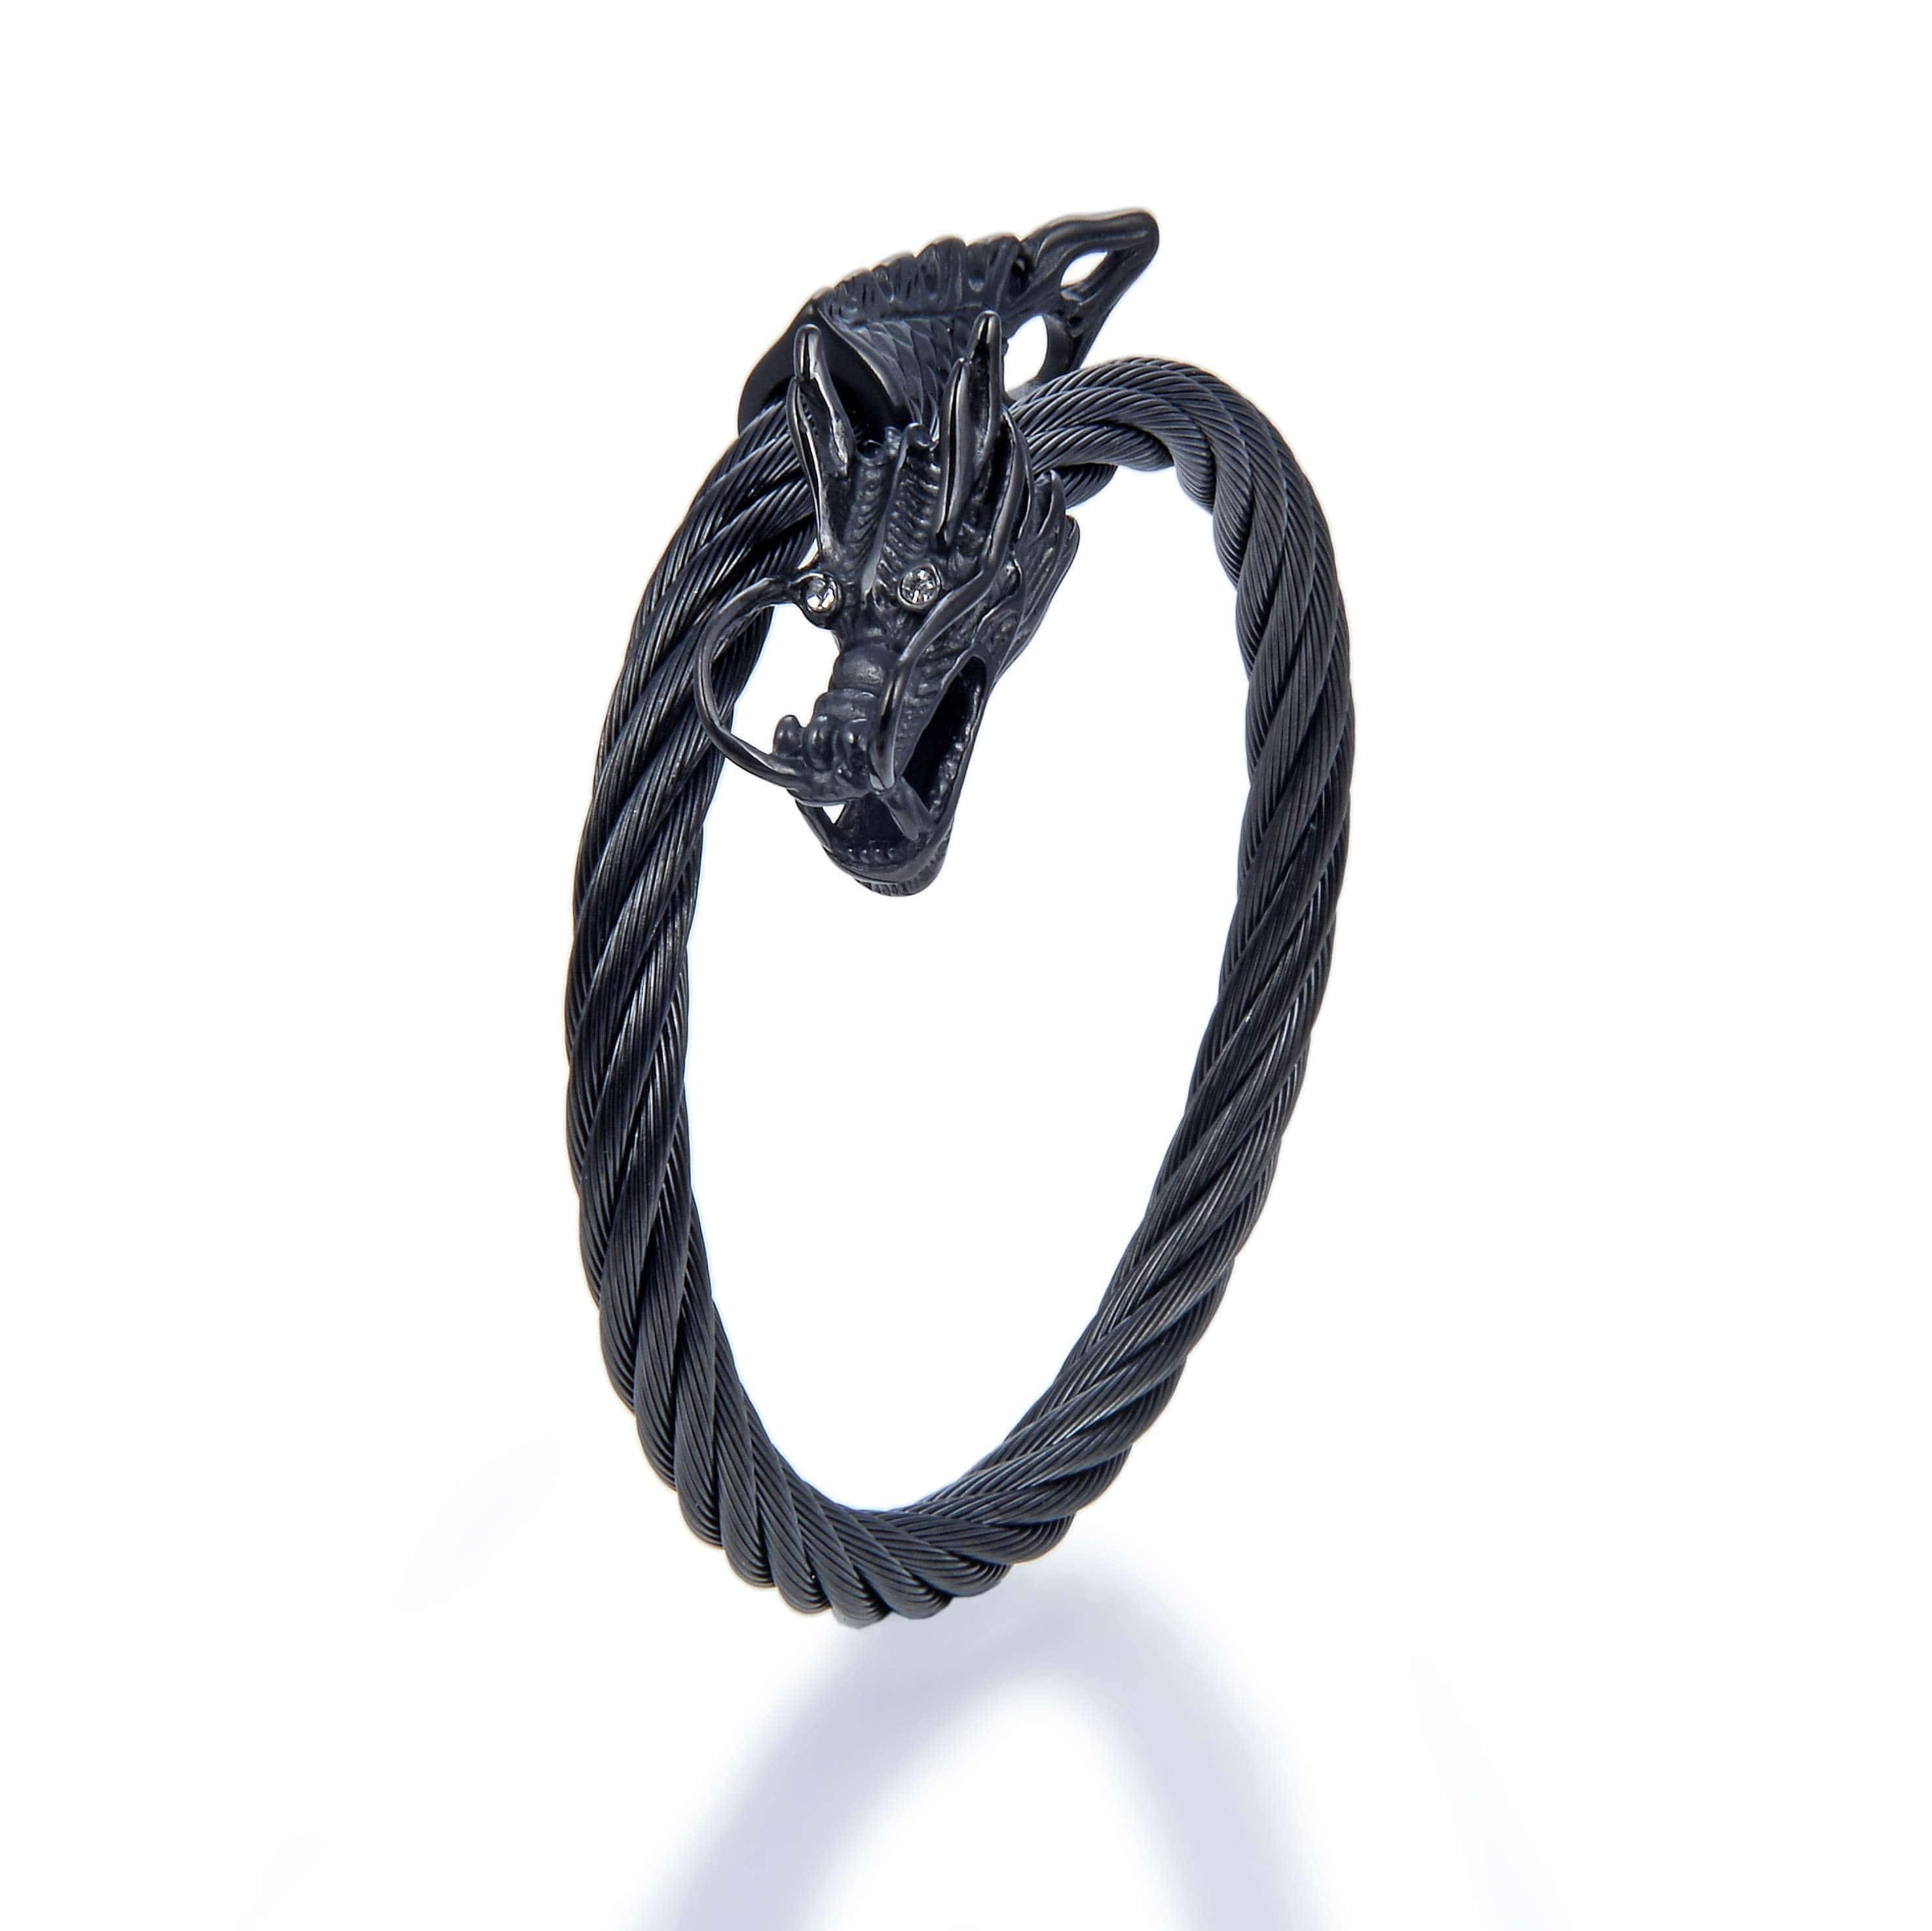 Kalifano Steel Hearts Jewelry Steel Hearts Black Rope Chain Chinese Dragon Tip Open Bangle Bracelet SHB200-55